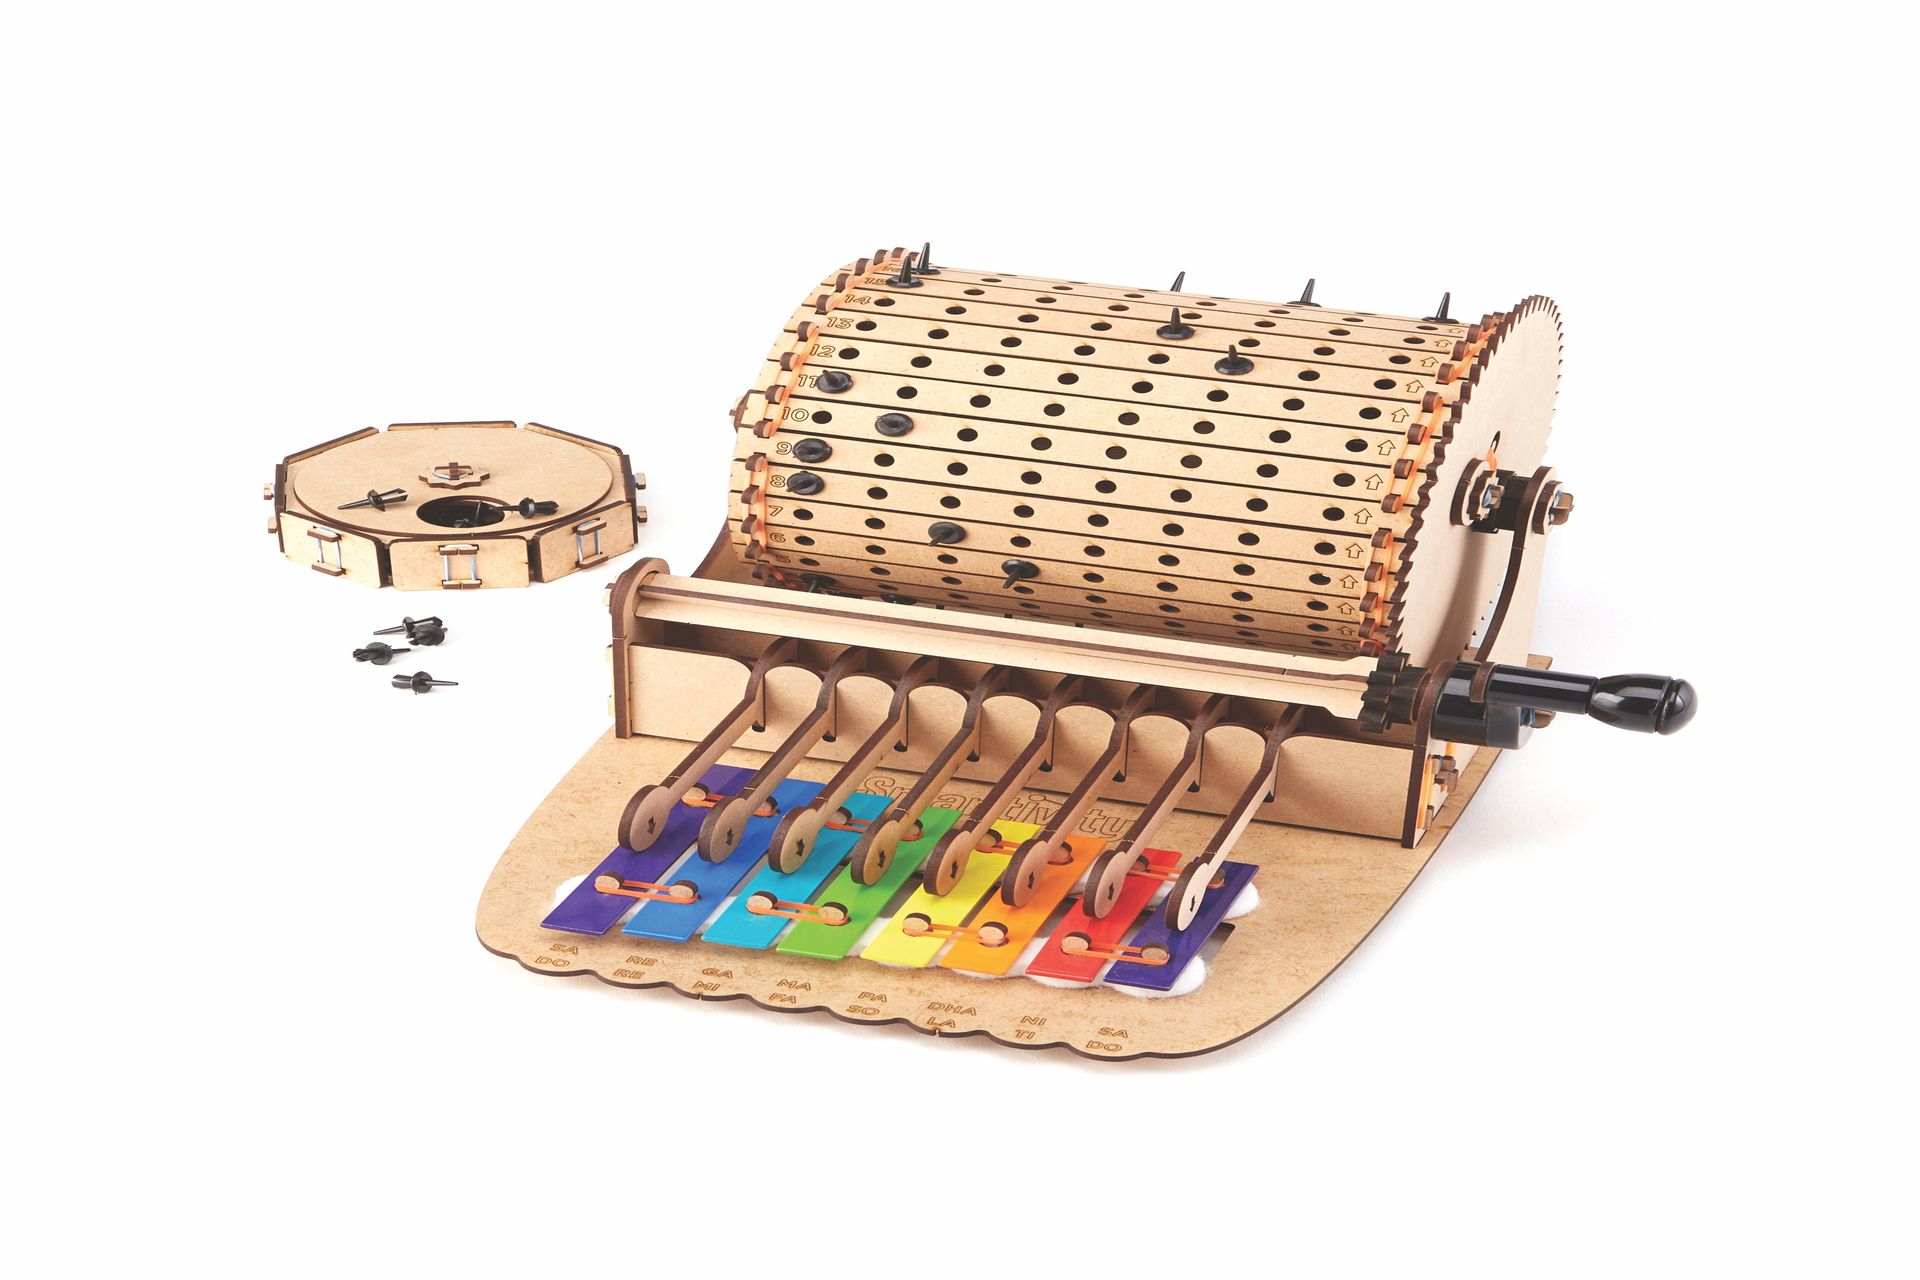 Xylophone music machine kit 2 - 2019 top toys